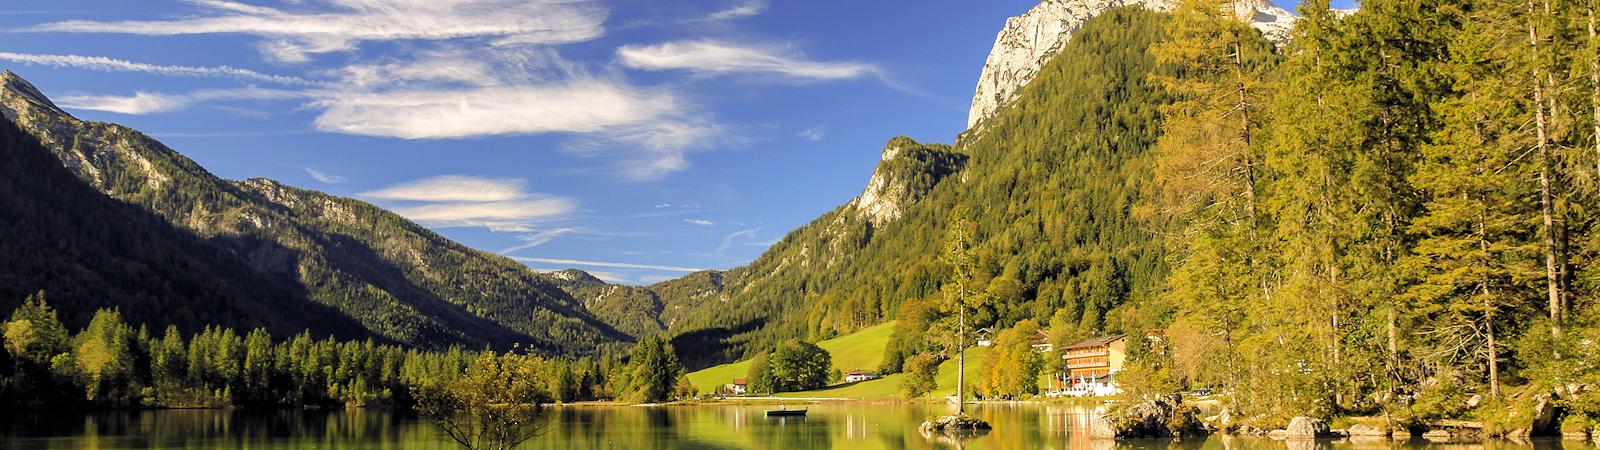 berchtesgadener land